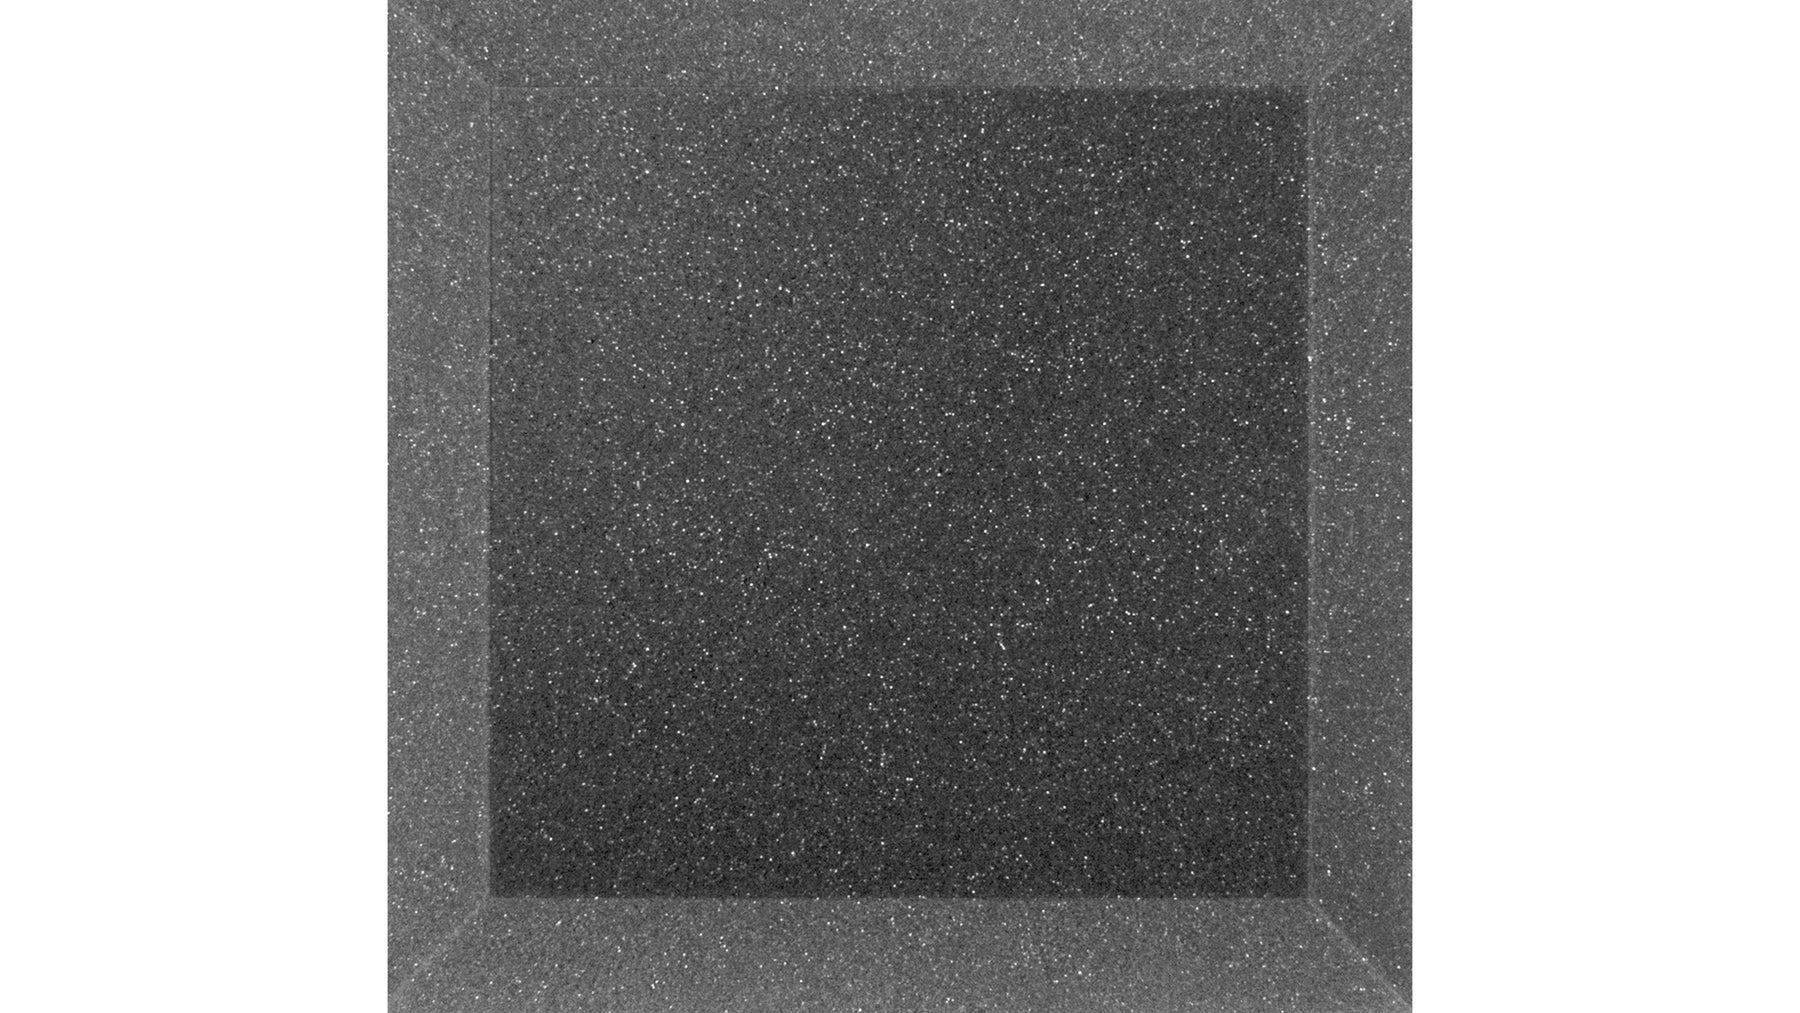 UA-WPB-12_24 Bevel Panel, 12" x 12" - Charcoal | Quantity: Twenty Four (24)